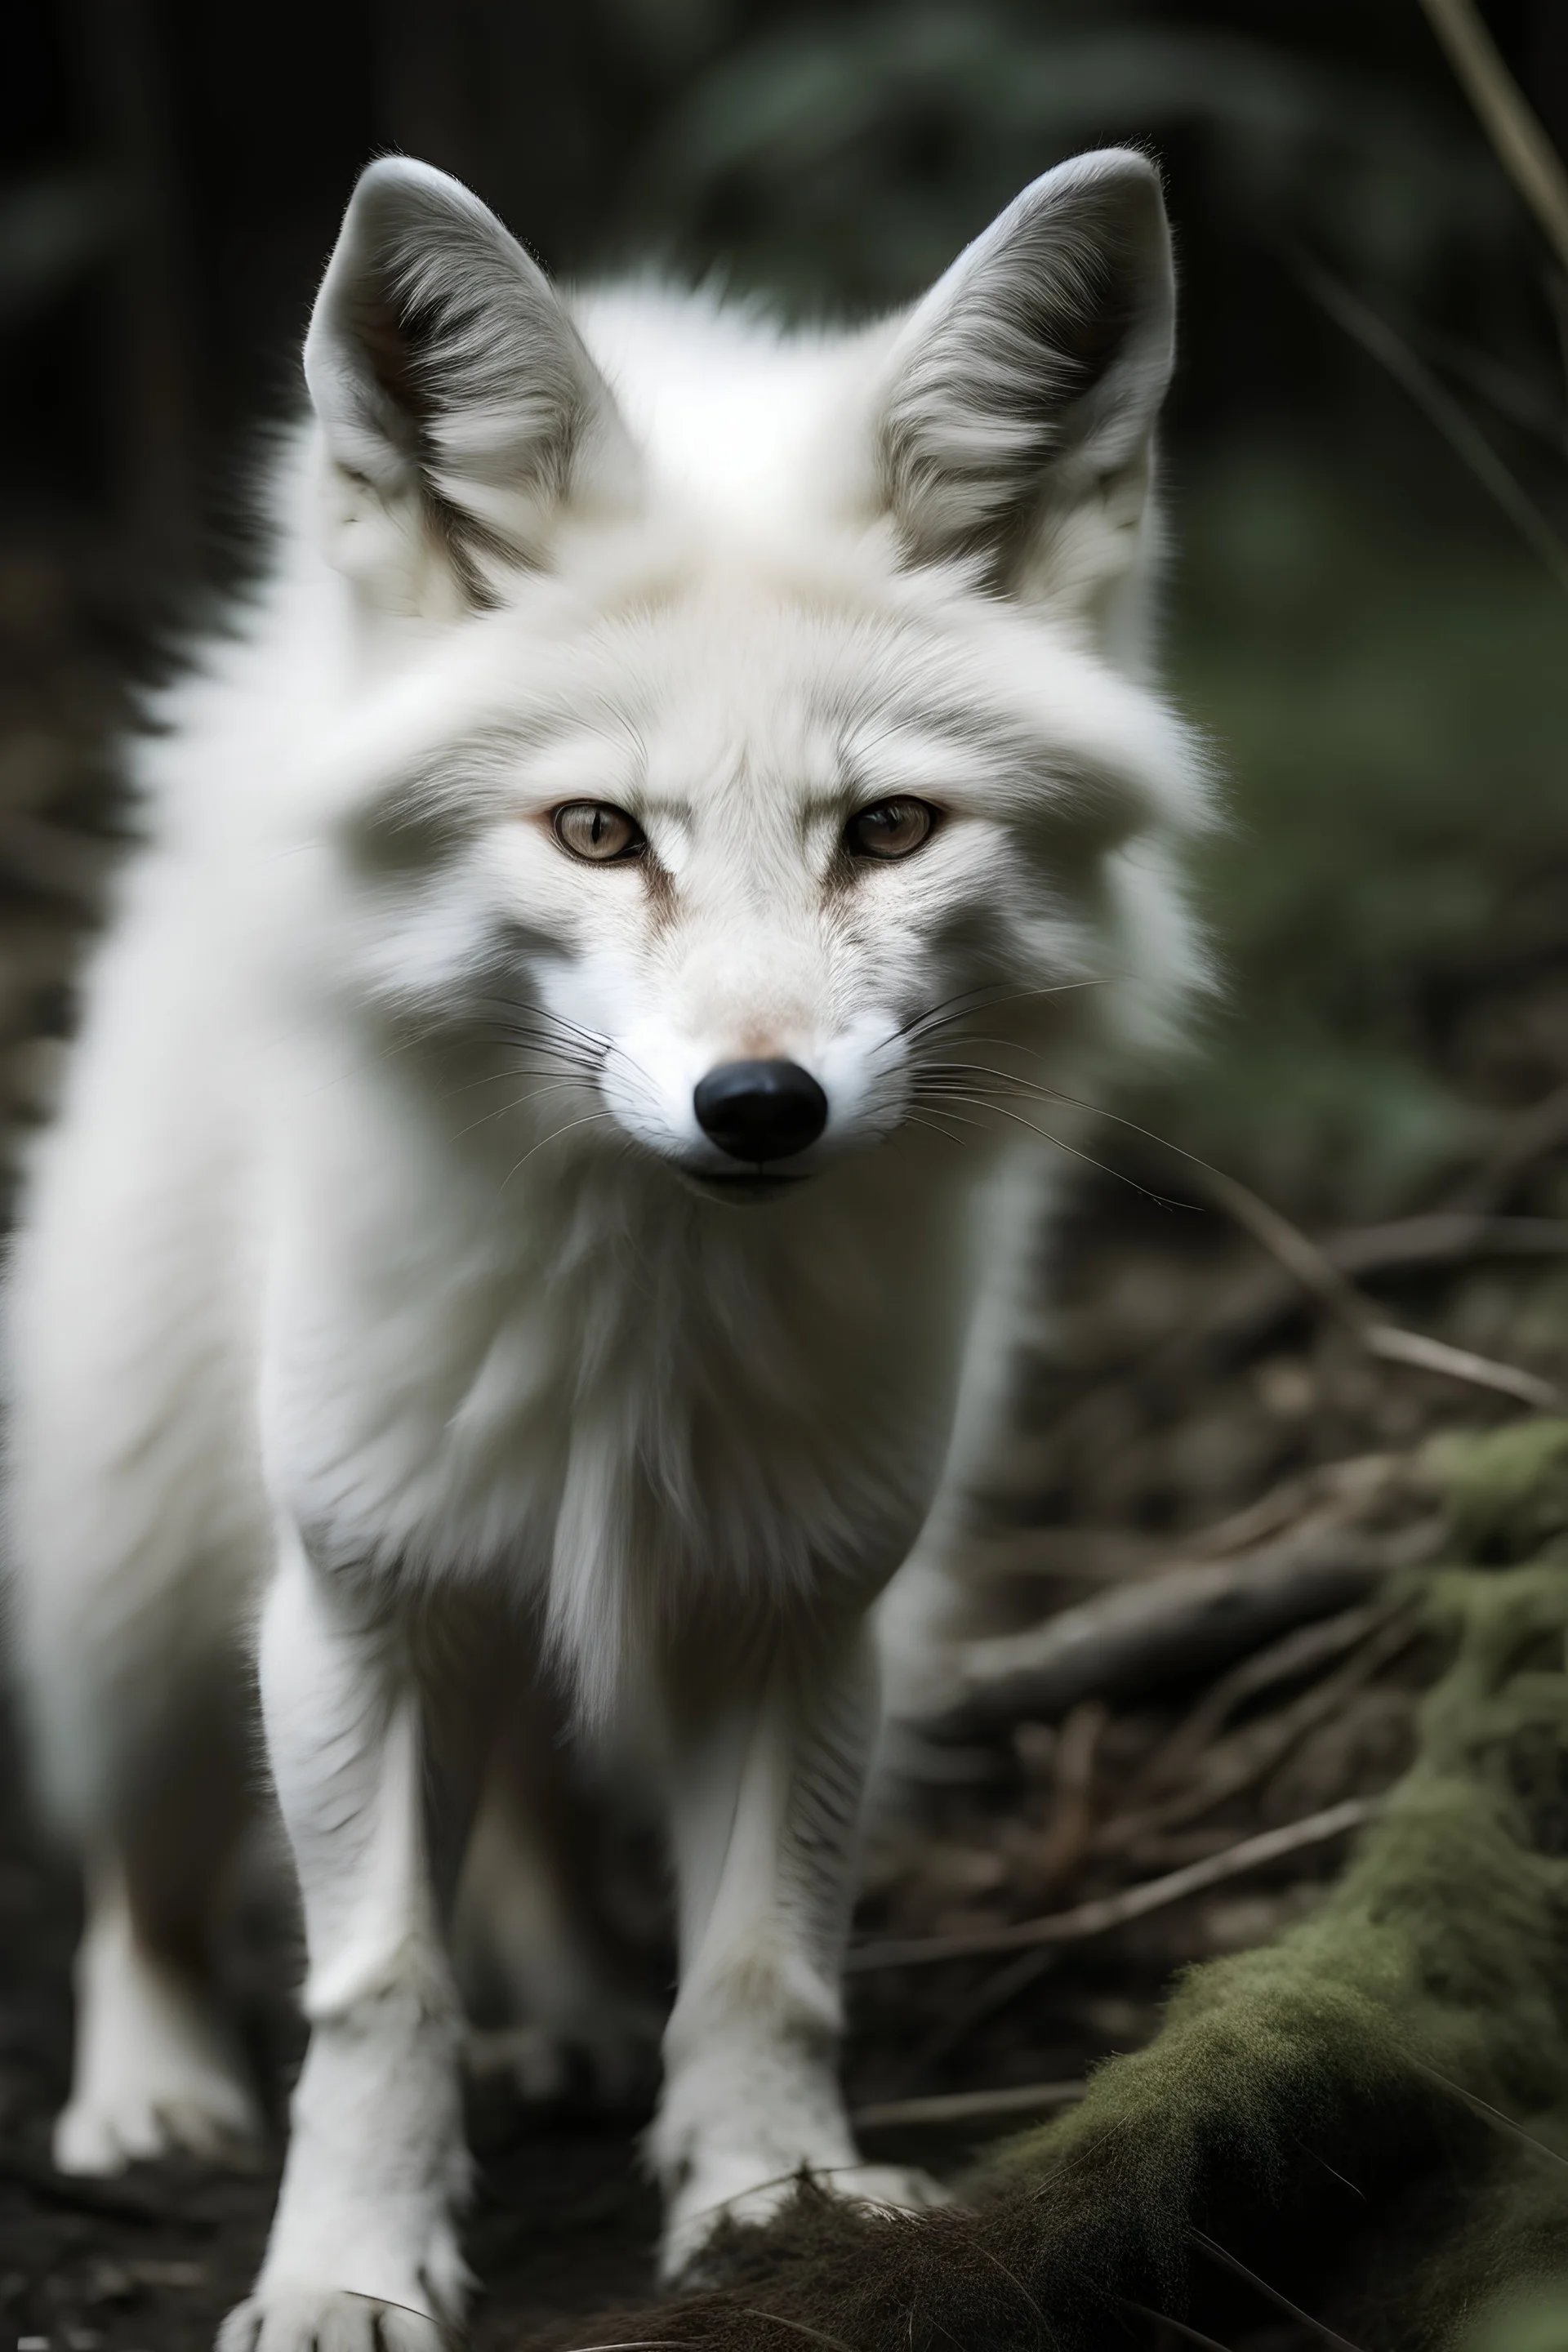 volpe bianca assassina